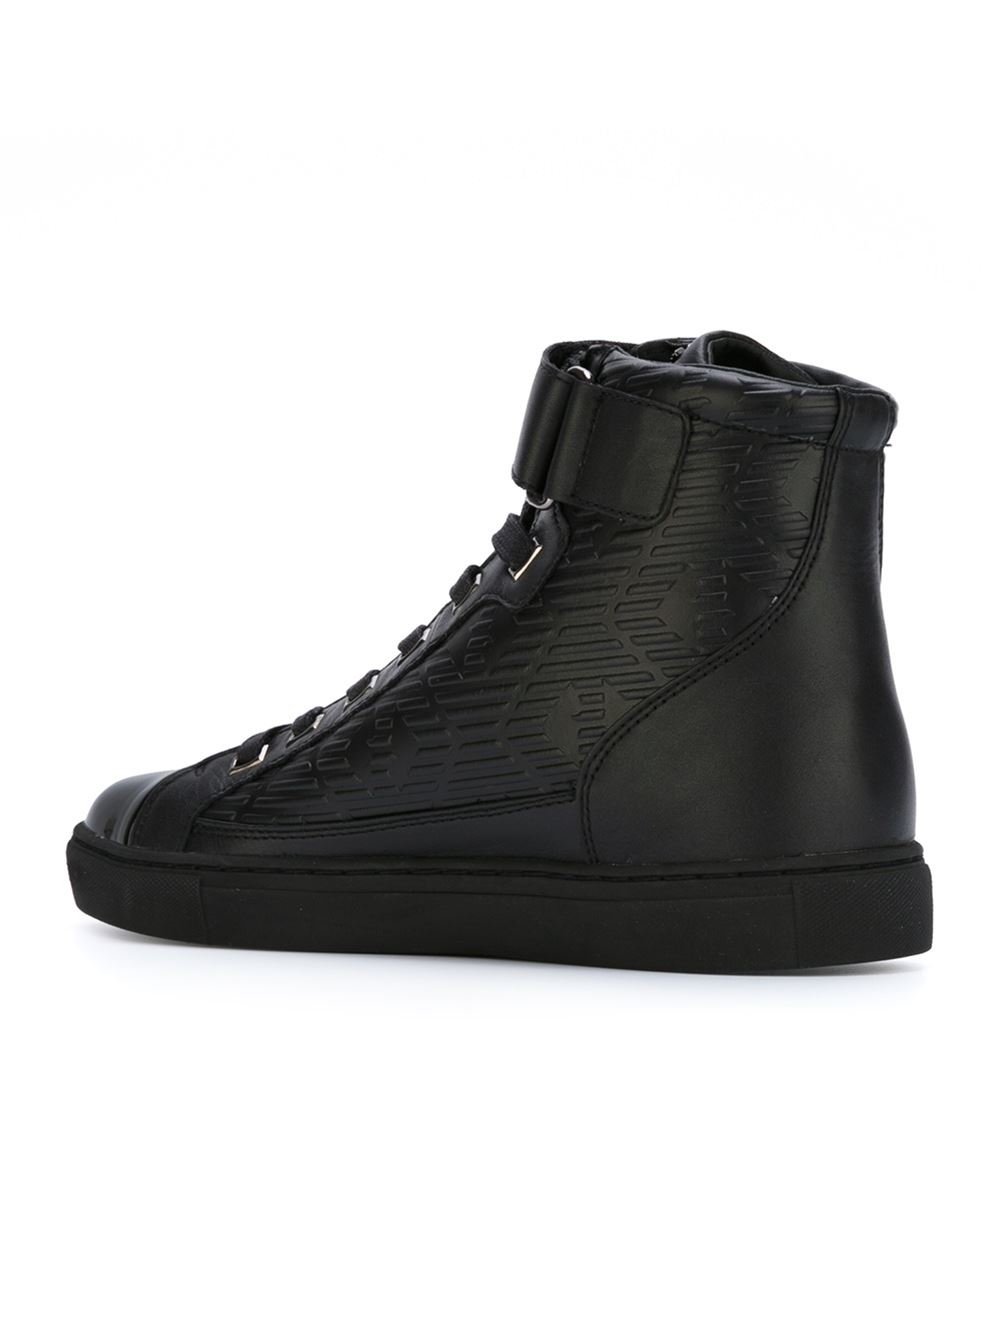 Kilometers Onmogelijk Ontevreden Armani Jeans Leather High-Top Sneakers in Black for Men | Lyst